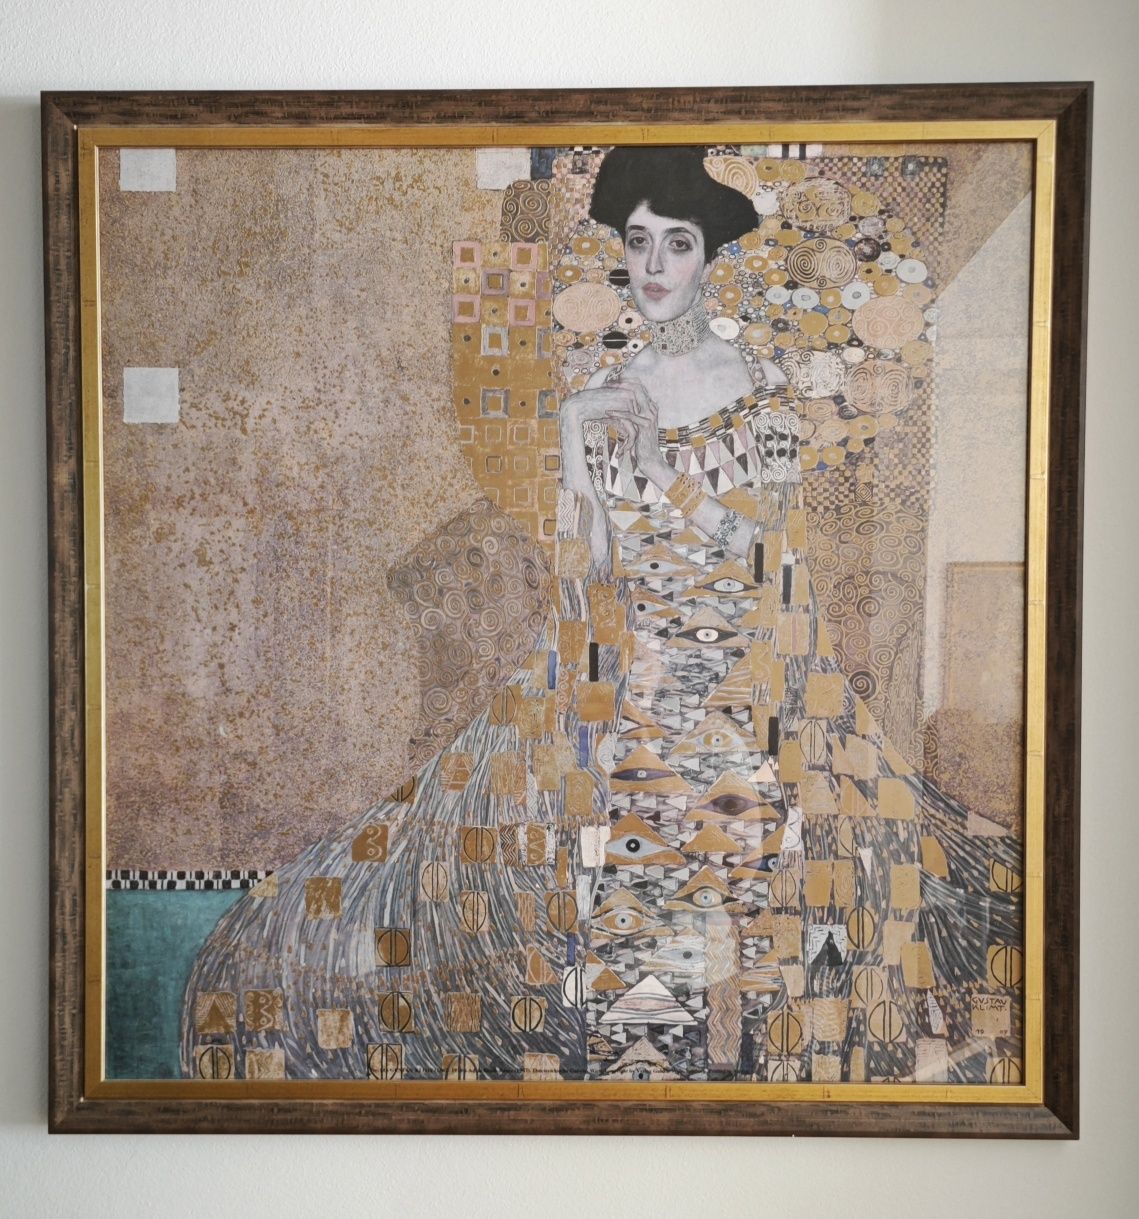 Gustav Klimt "Portret Adele Bloch-Bauer" - reprodukcja plakat